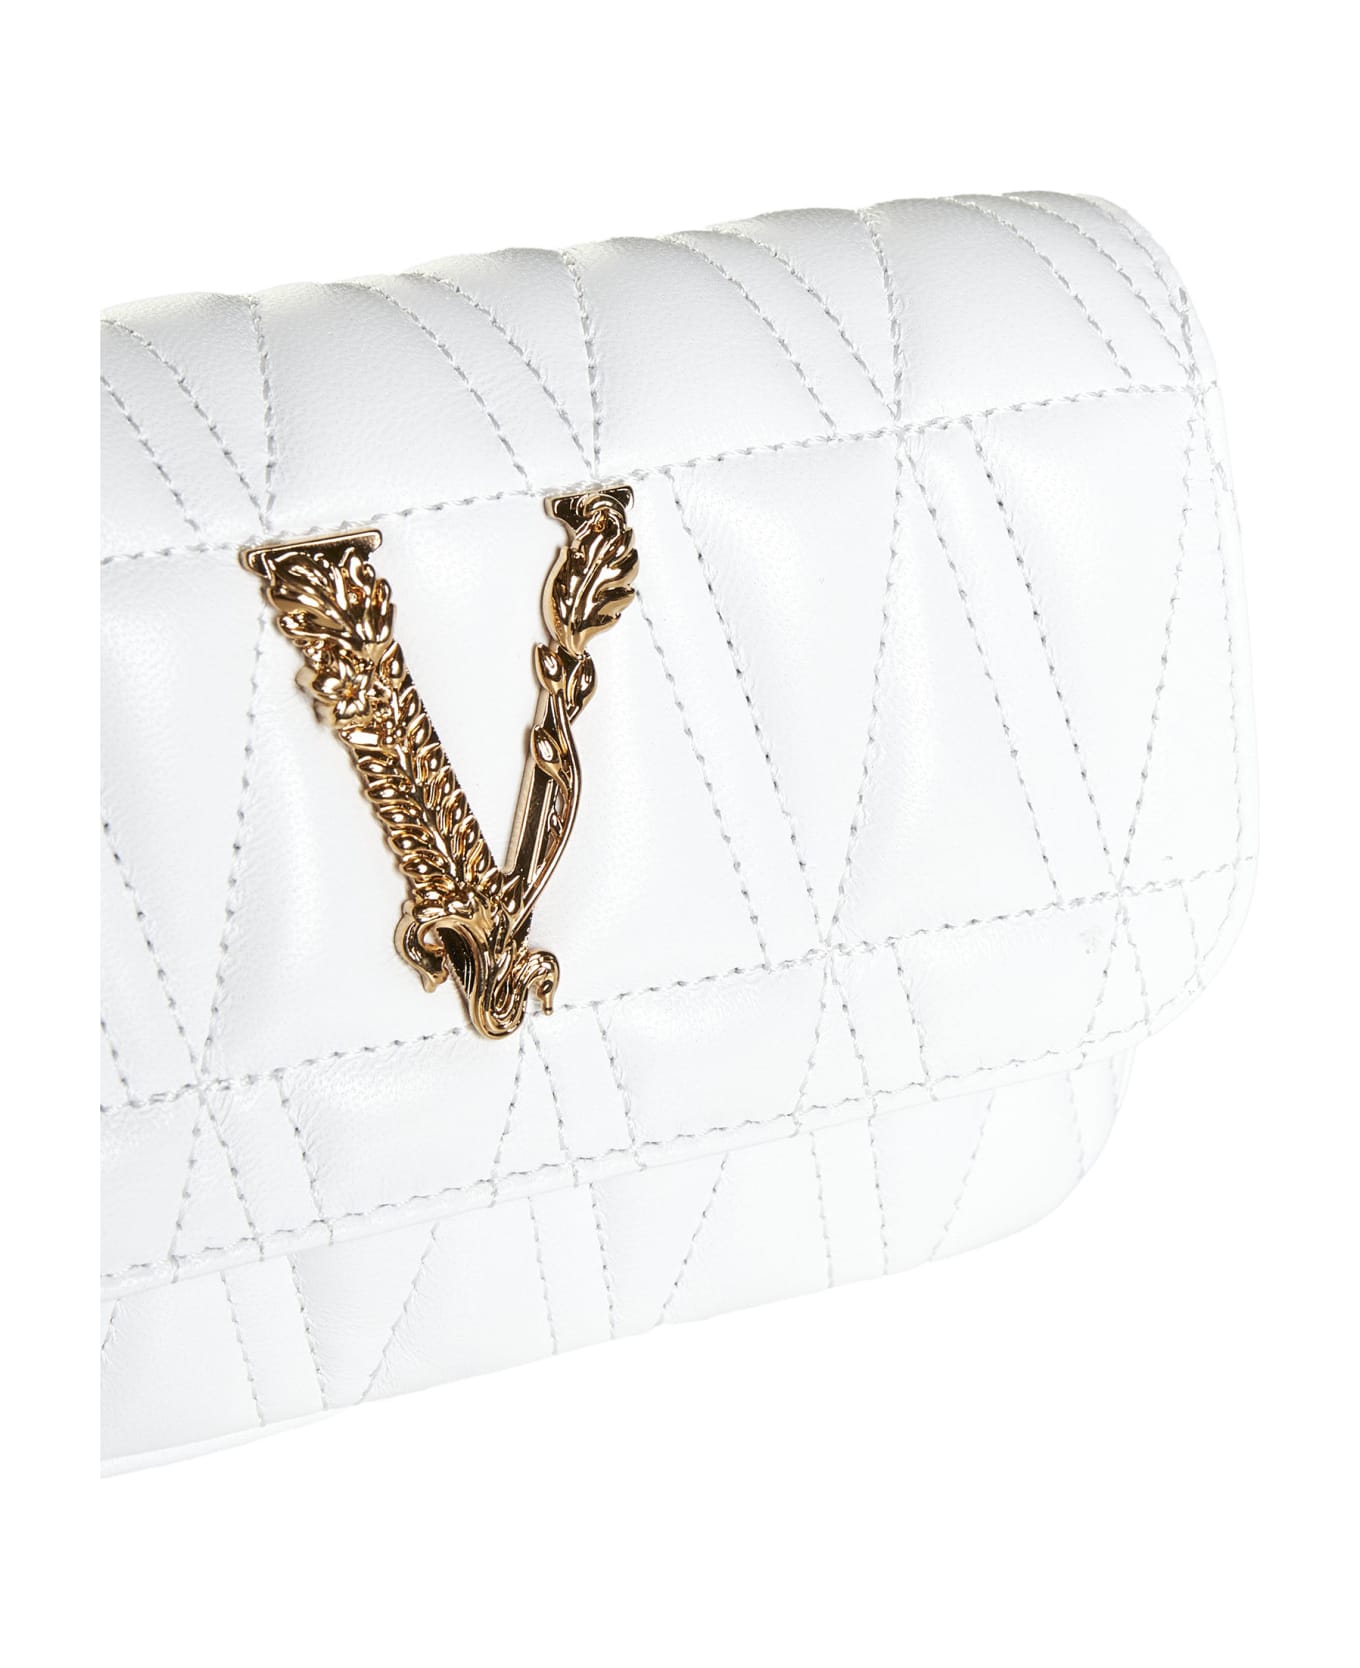 Versace Virtus Shoulder Bag - White ショルダーバッグ